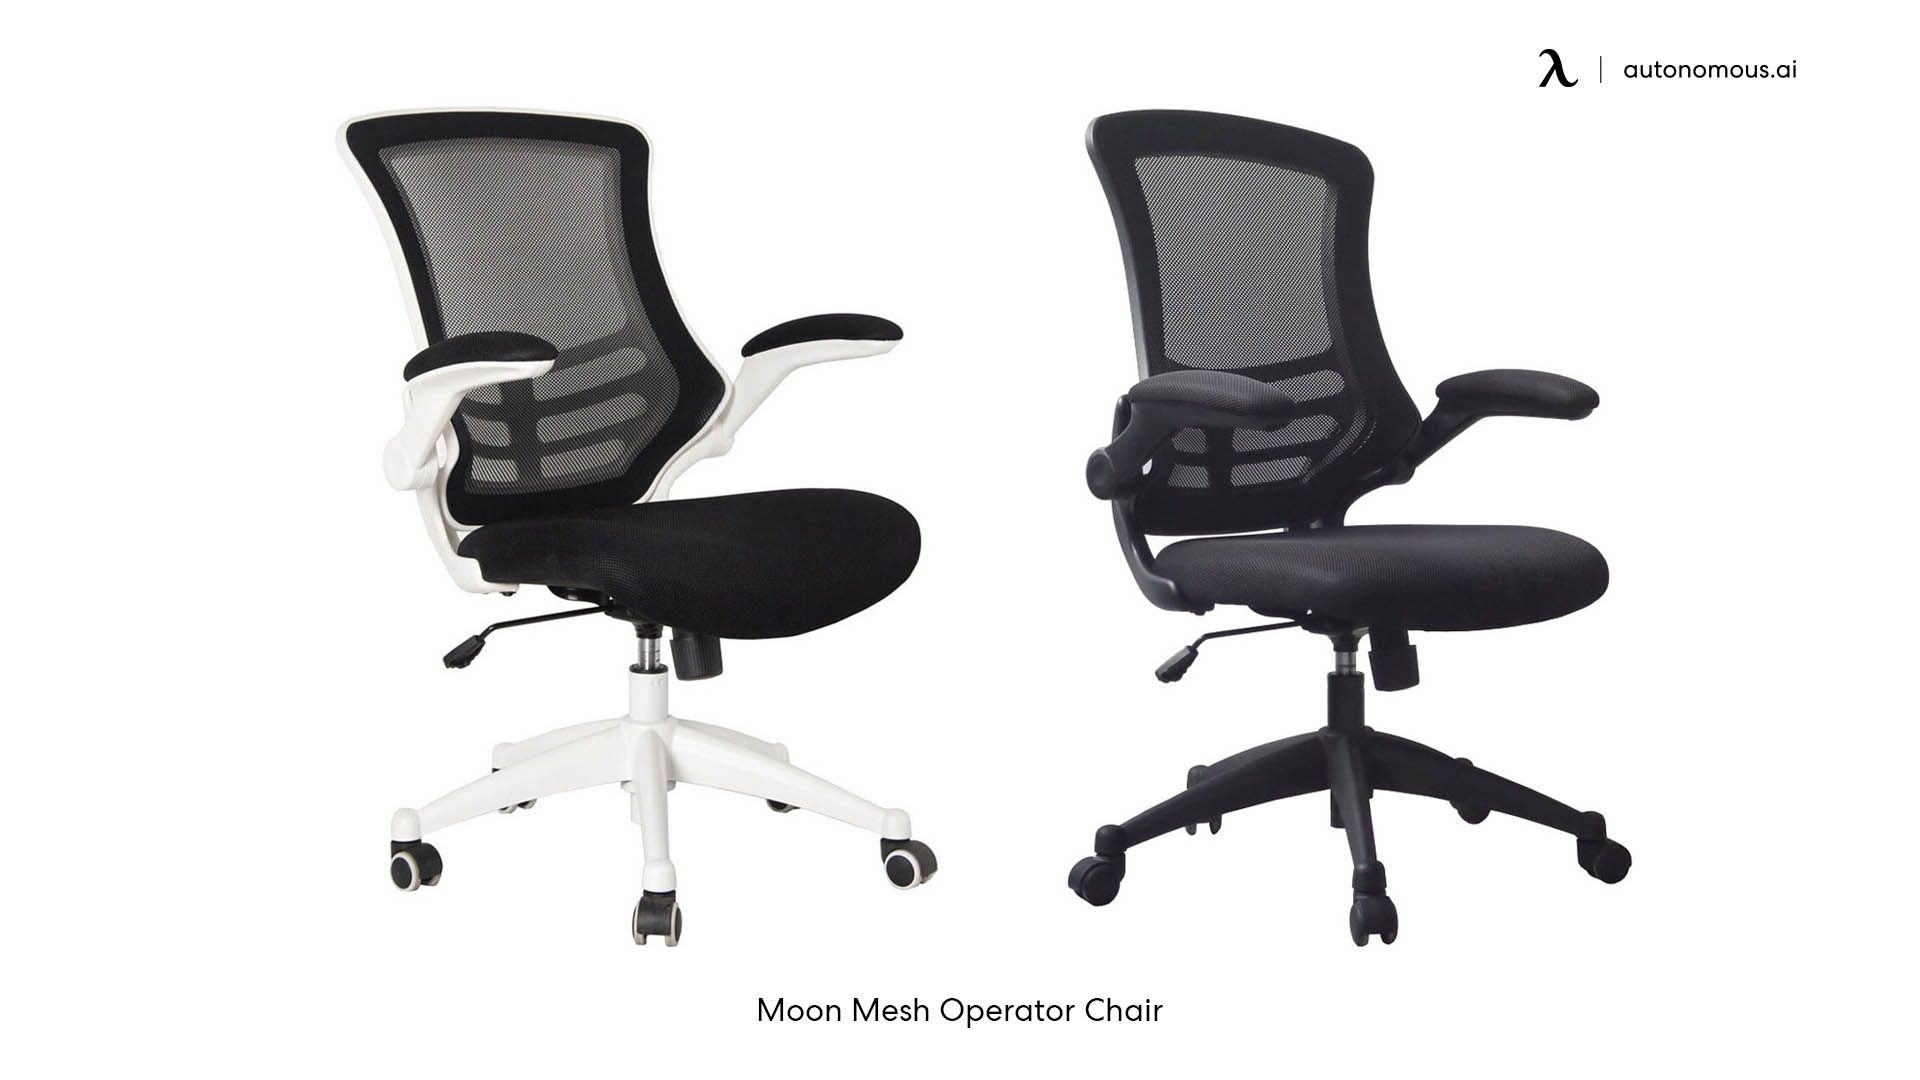 Moon Mesh Operator Chair